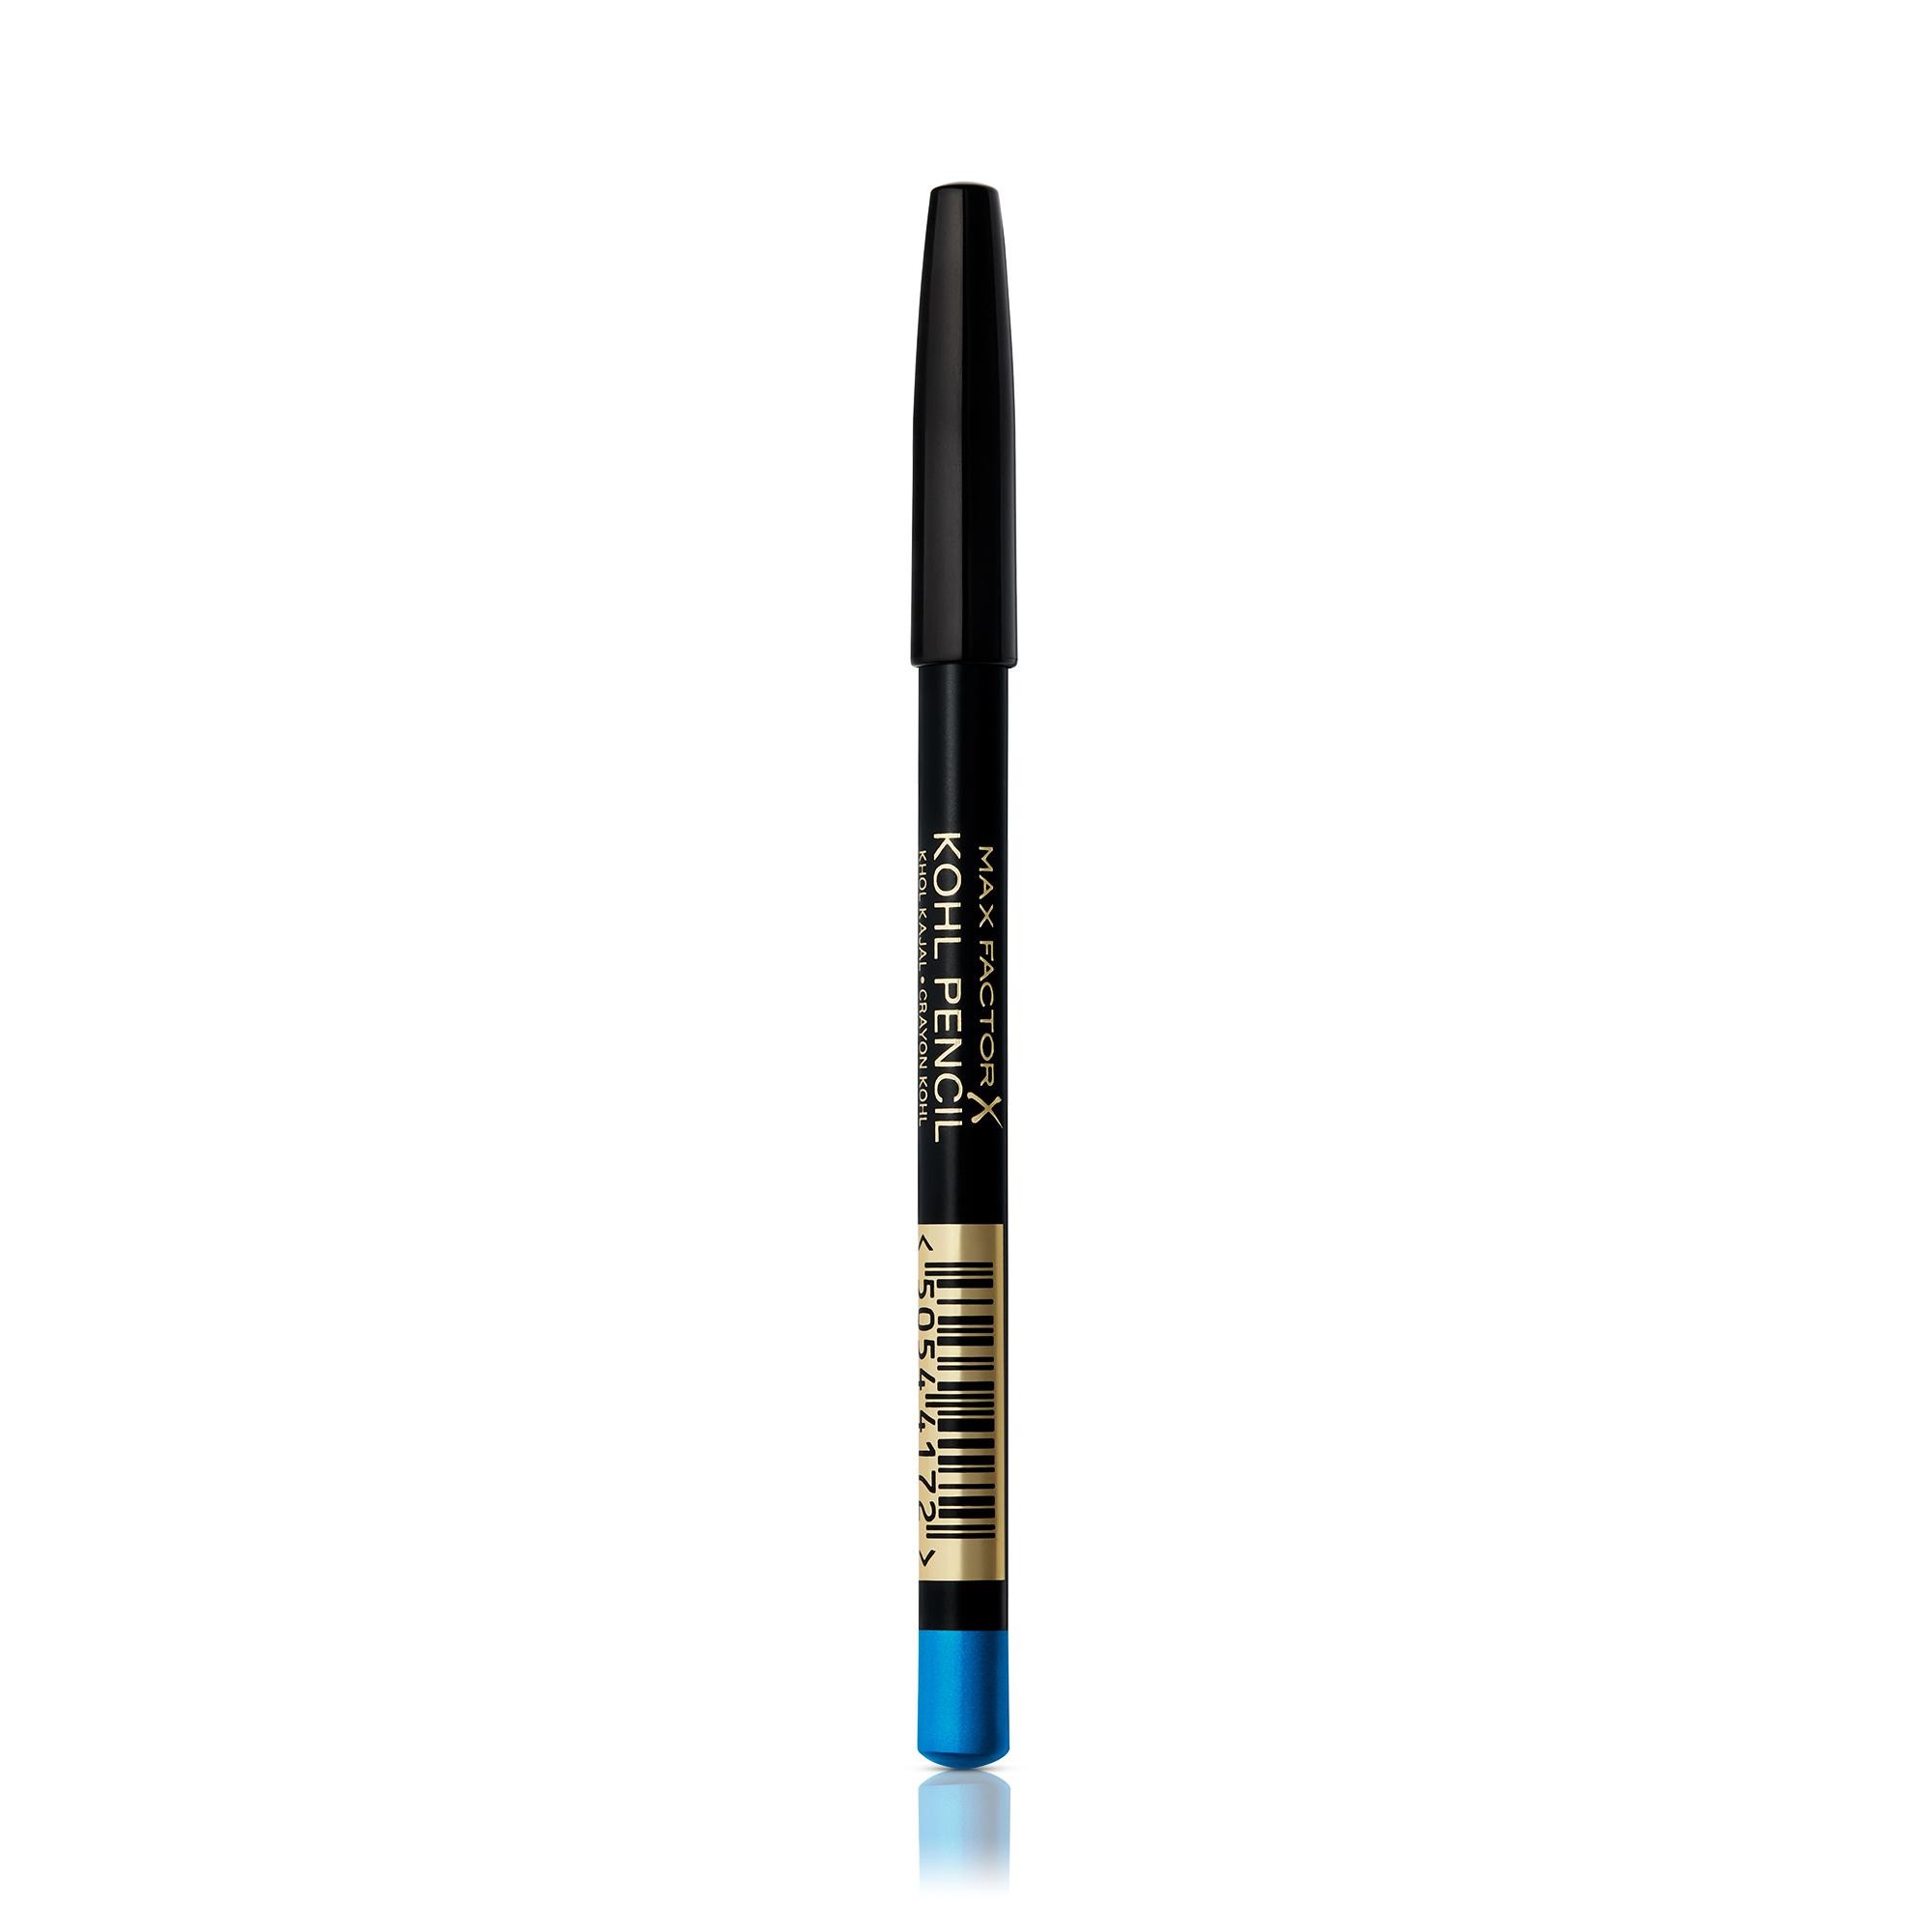 Max Factor Kohl Pencil, 080 Cobalt Blue, 1.2g